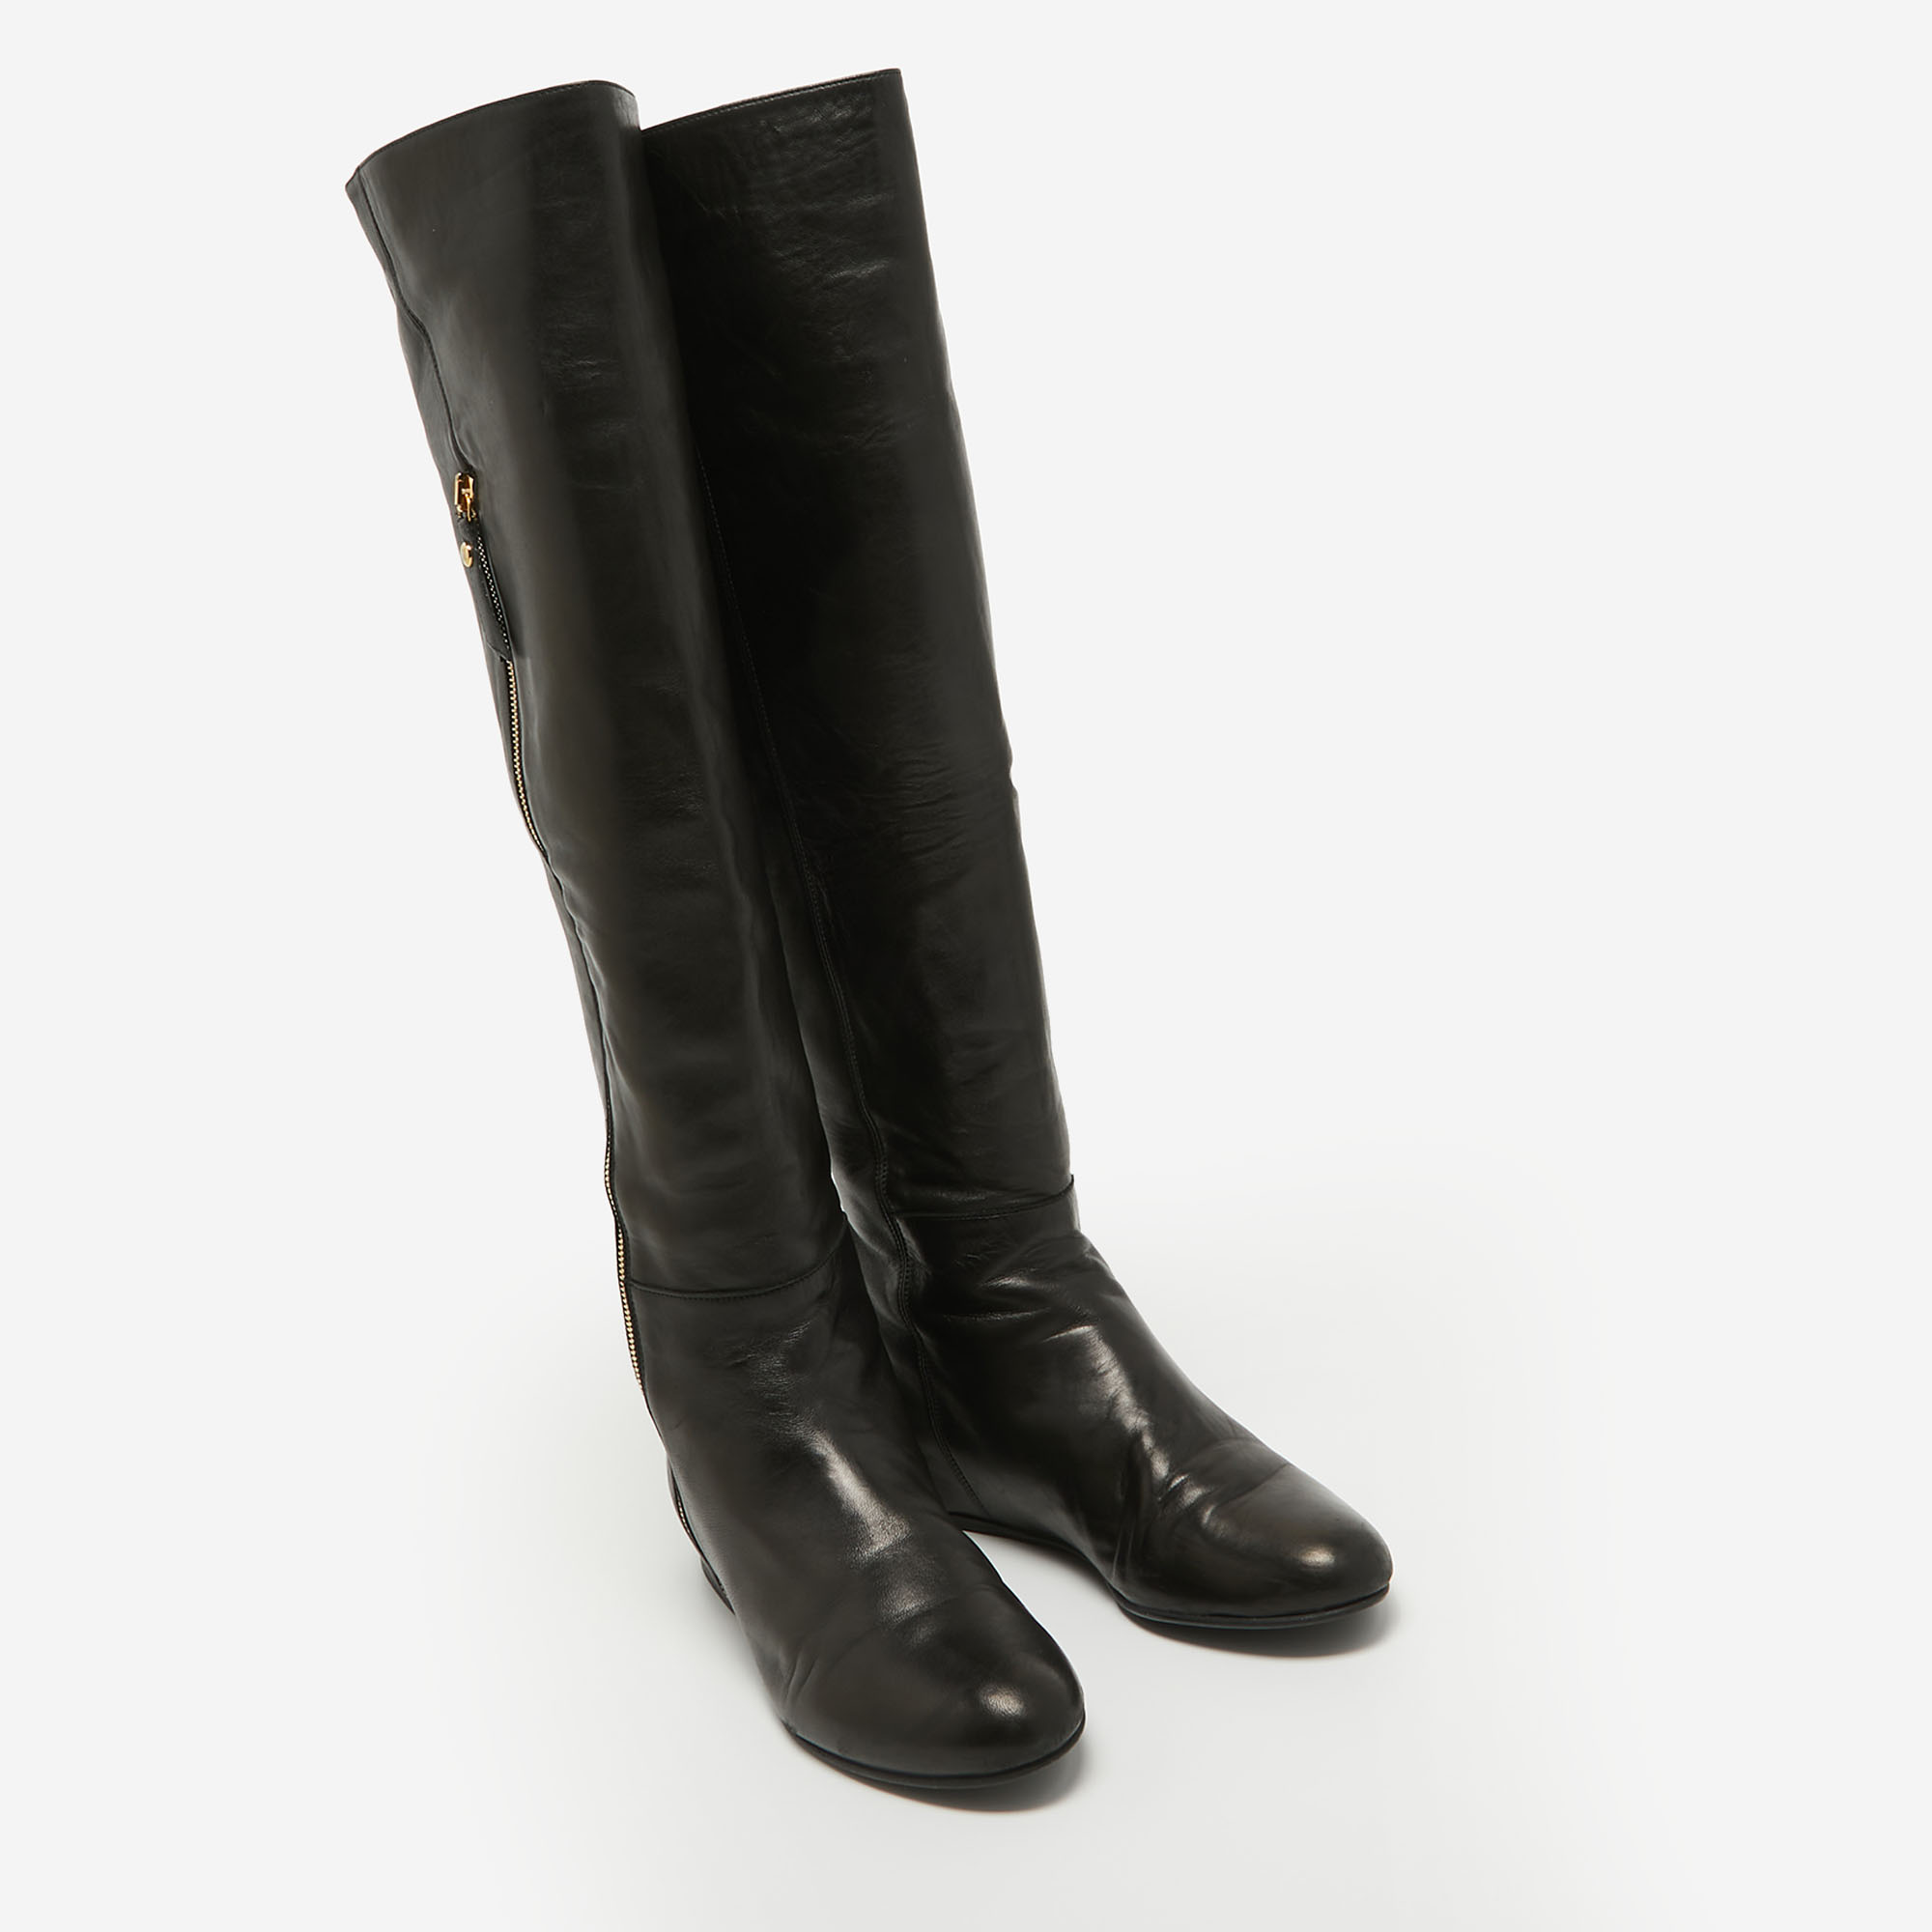 Stuart Weitzman Black Leather Knee Length Boots Size 36.5